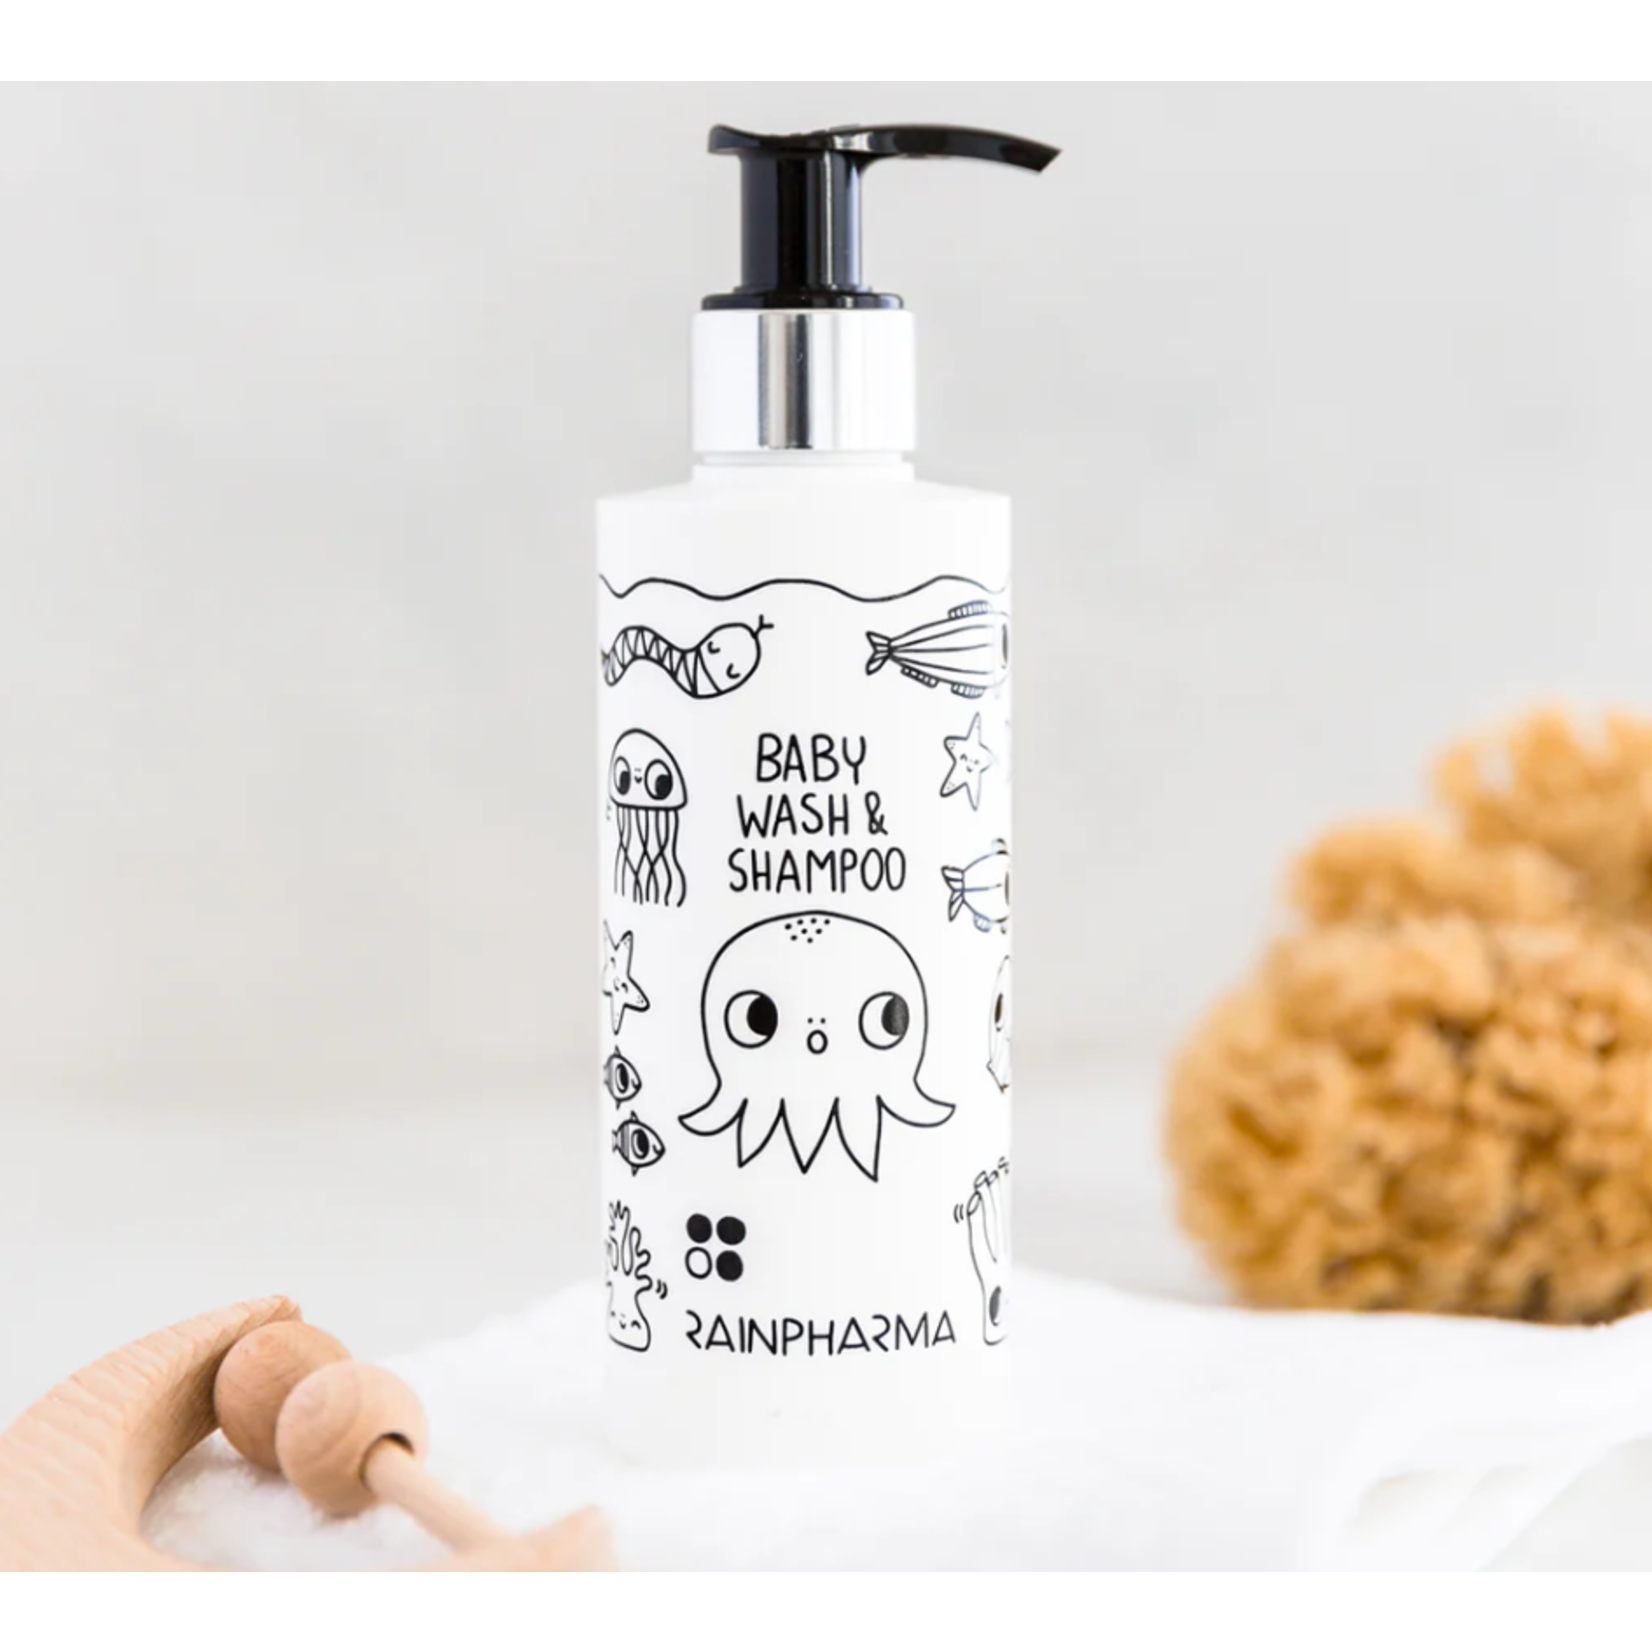 Rainpharma Rainpharma - Baby wash & shampoo (Eva Mouton)